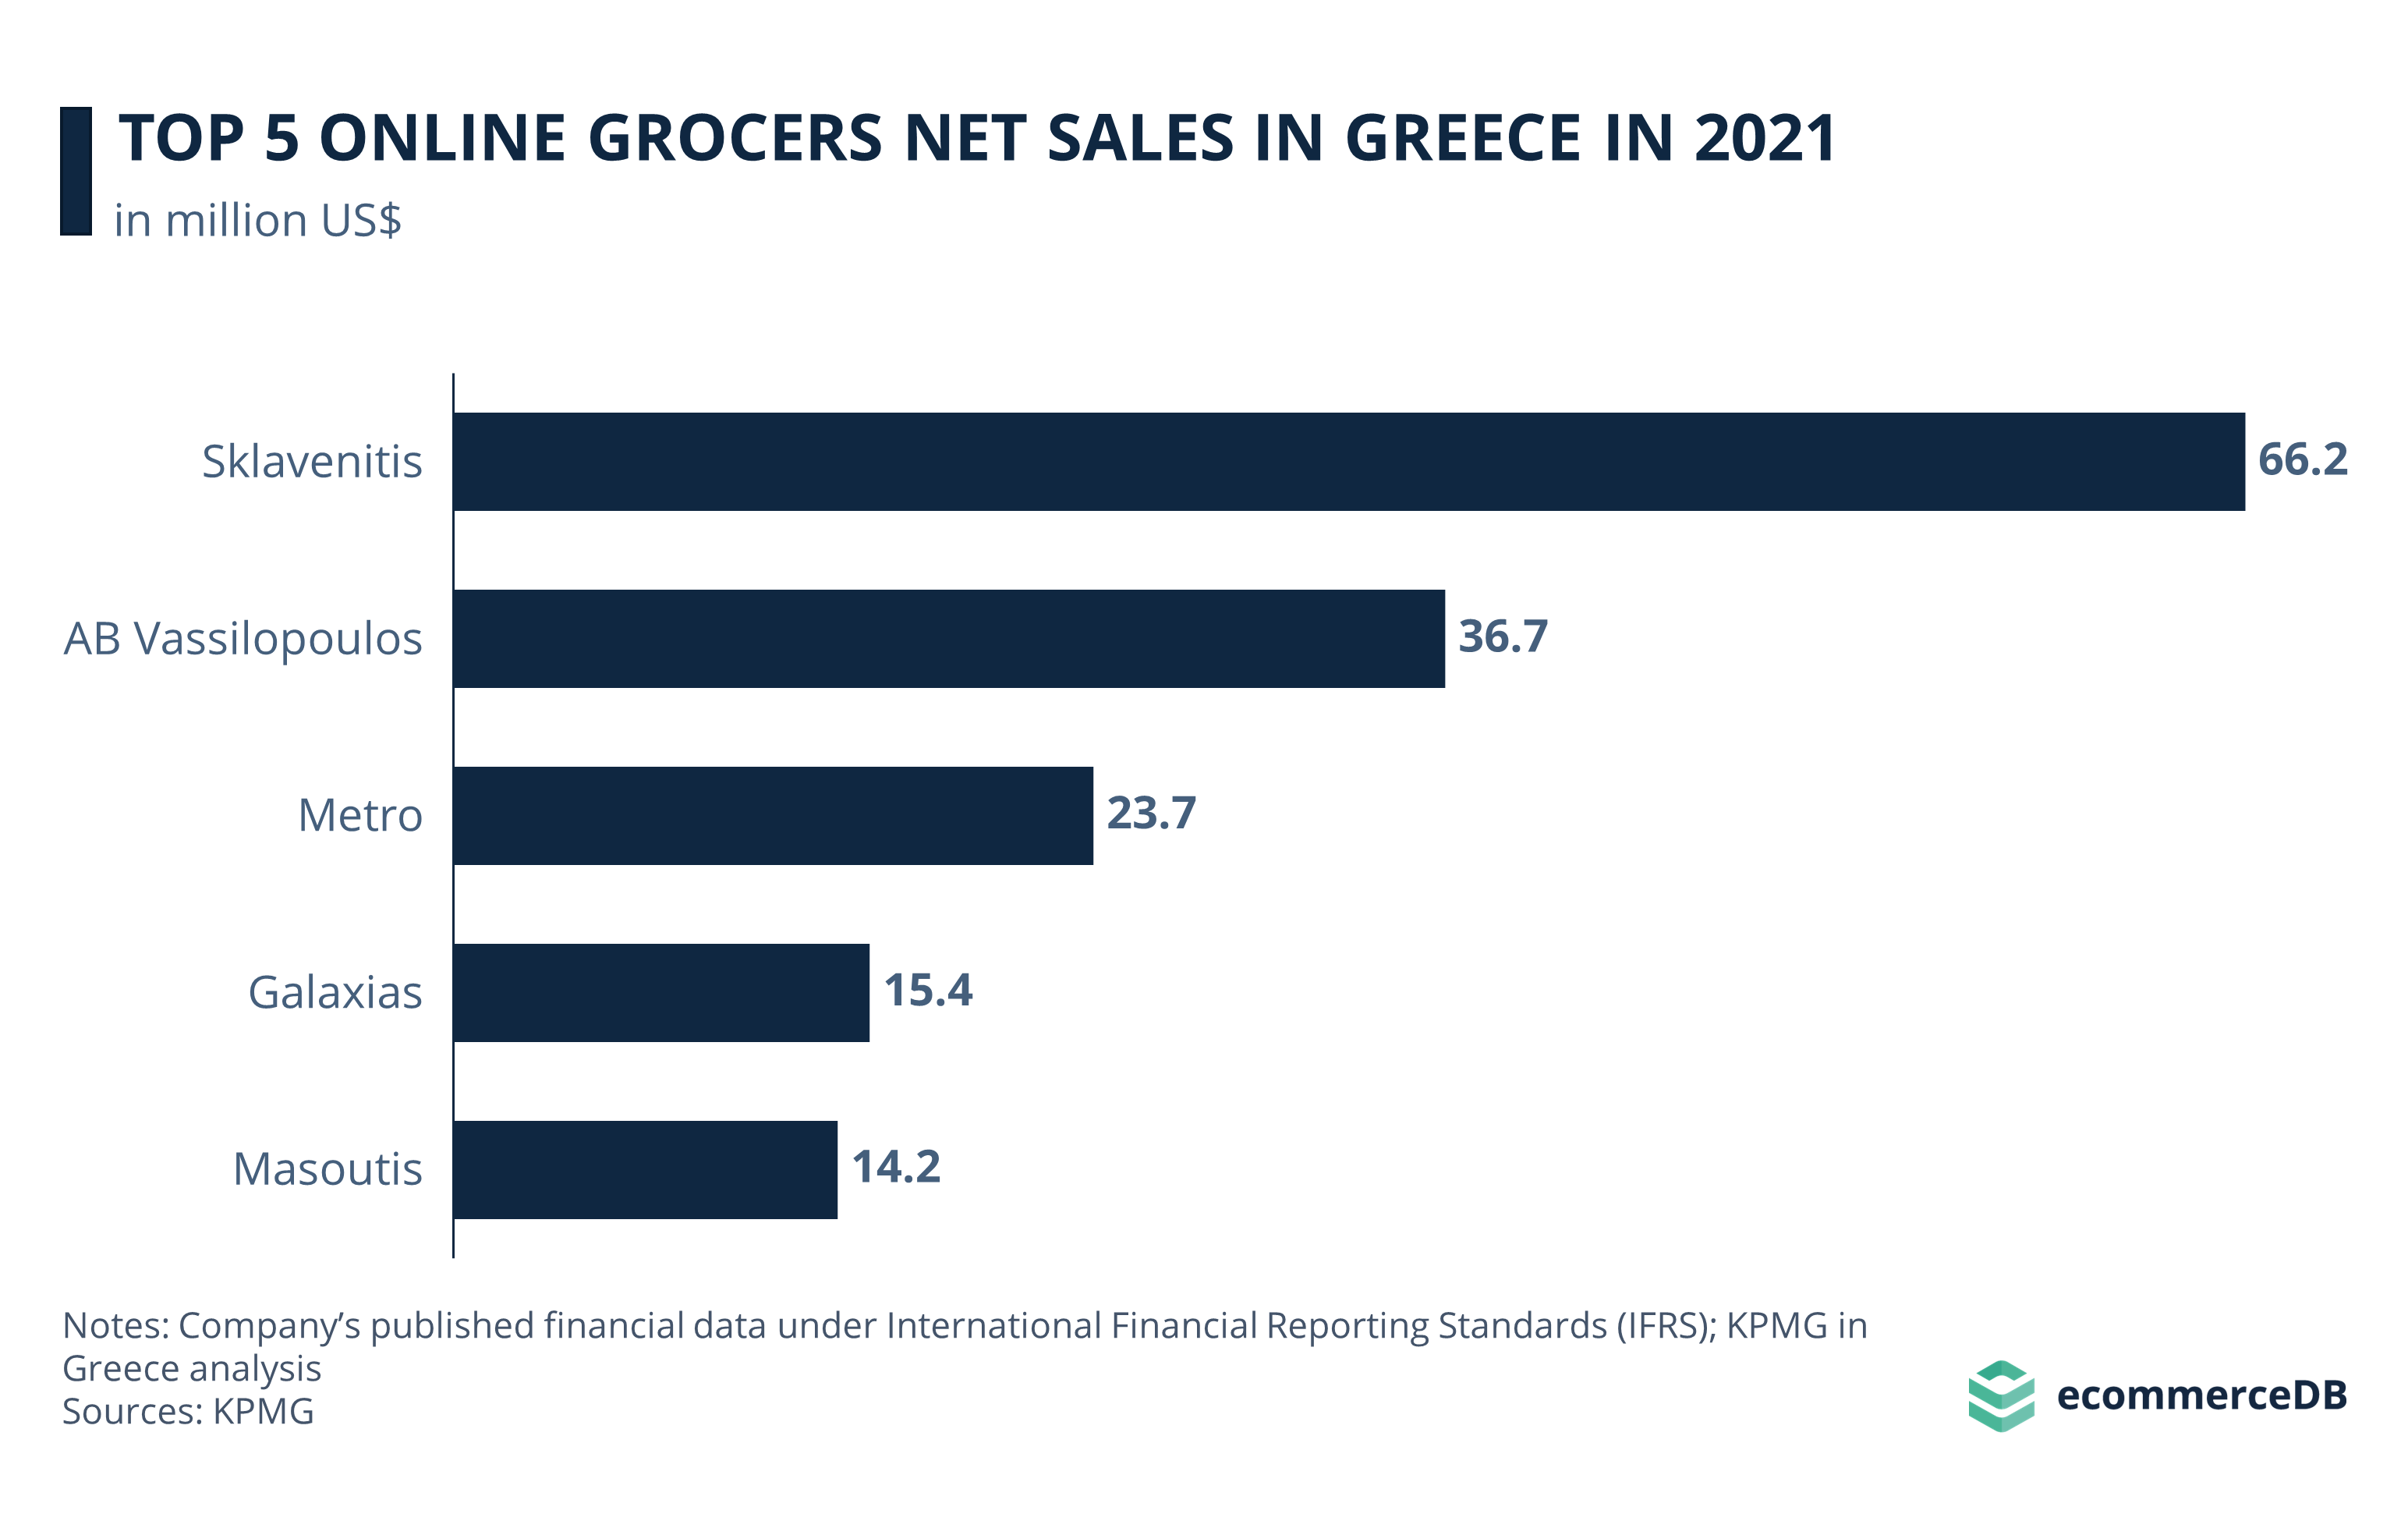 Top 5 Grocery Retailers Net Sales in Greece